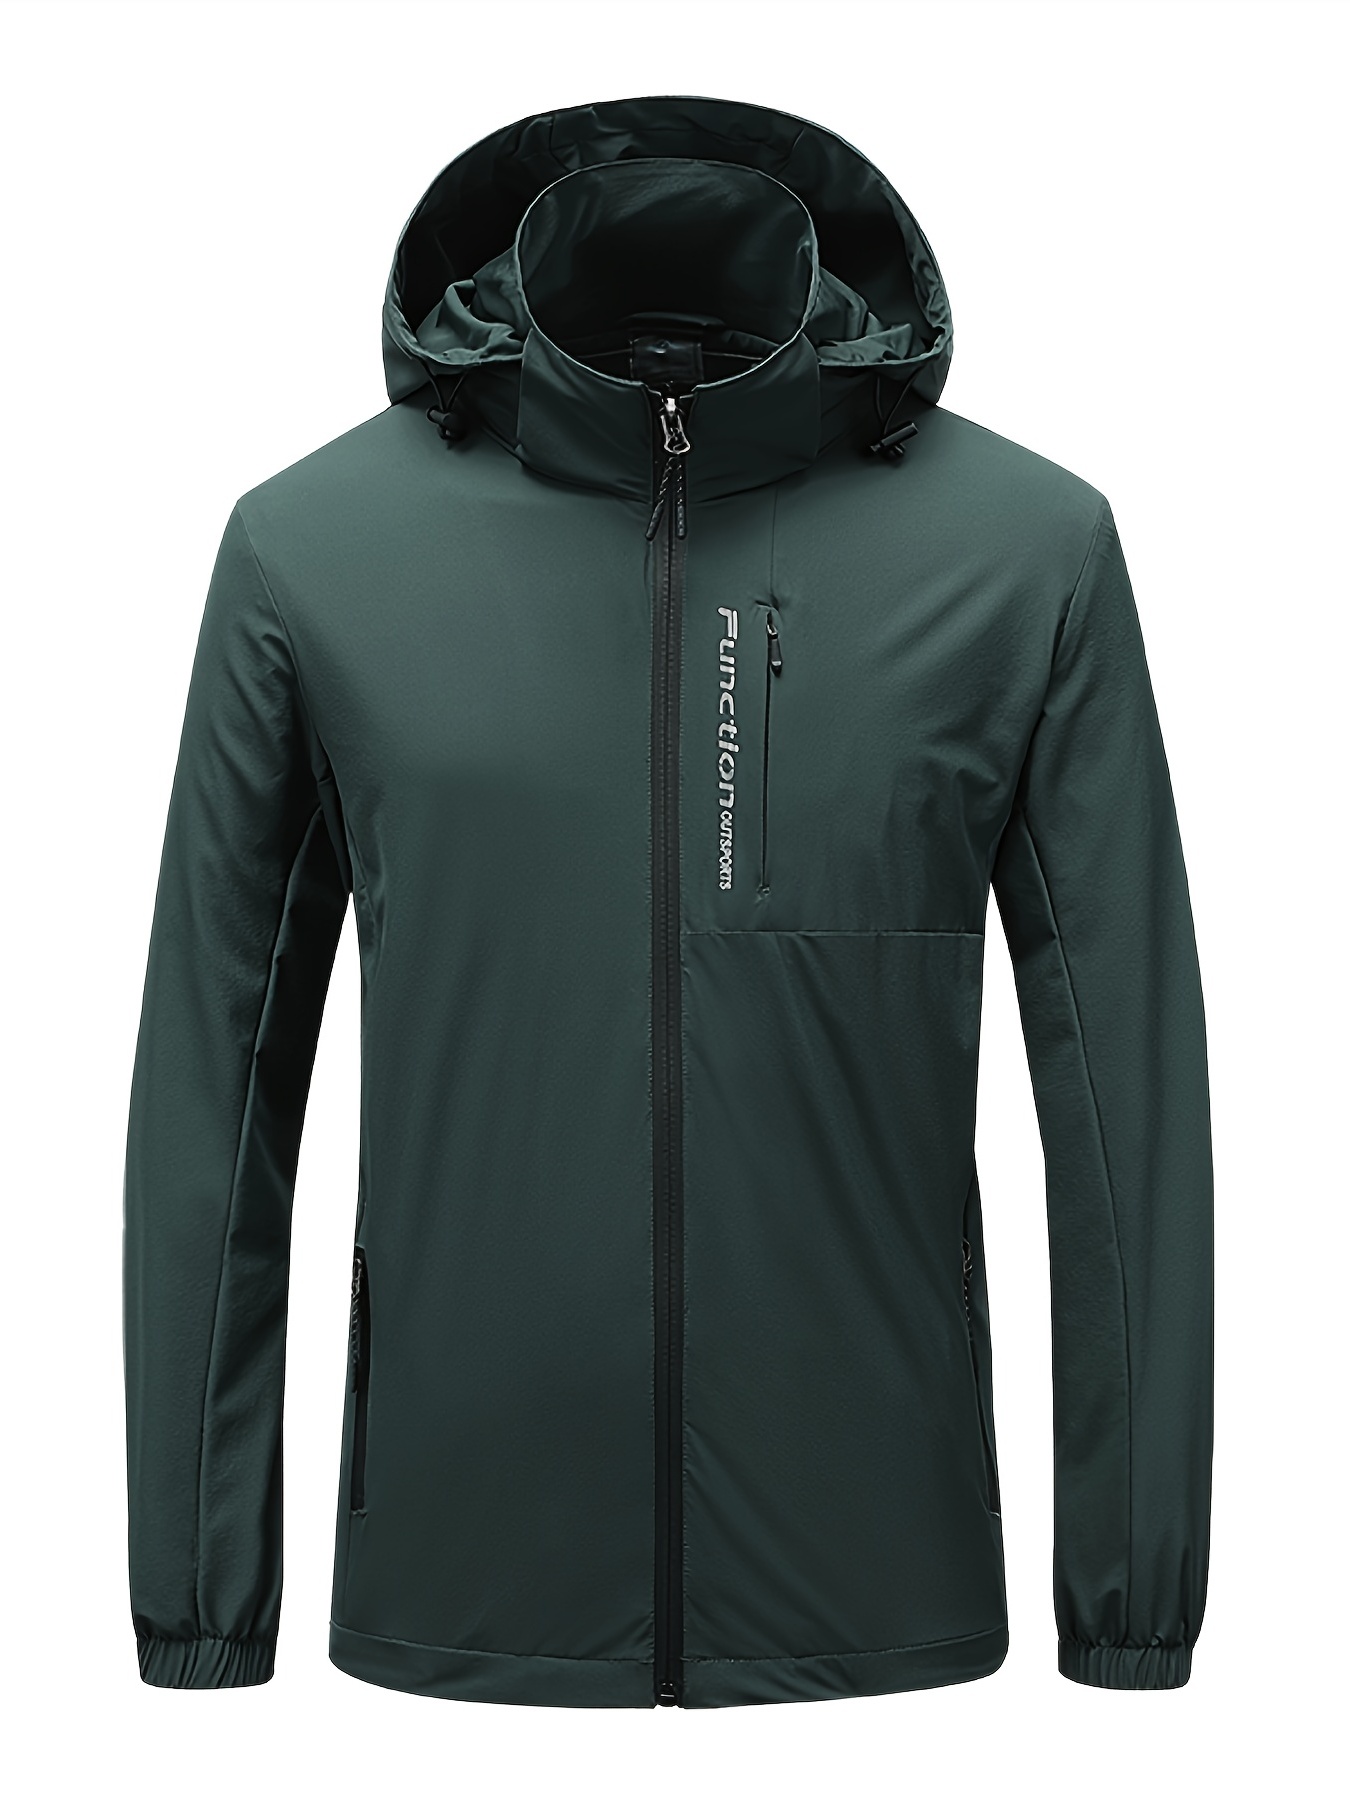 Men's Windproof Warm Jackets: Lightweight, Waterproof Sports Coat For  Outdoor Activities (Fishing, Hiking, Camping)